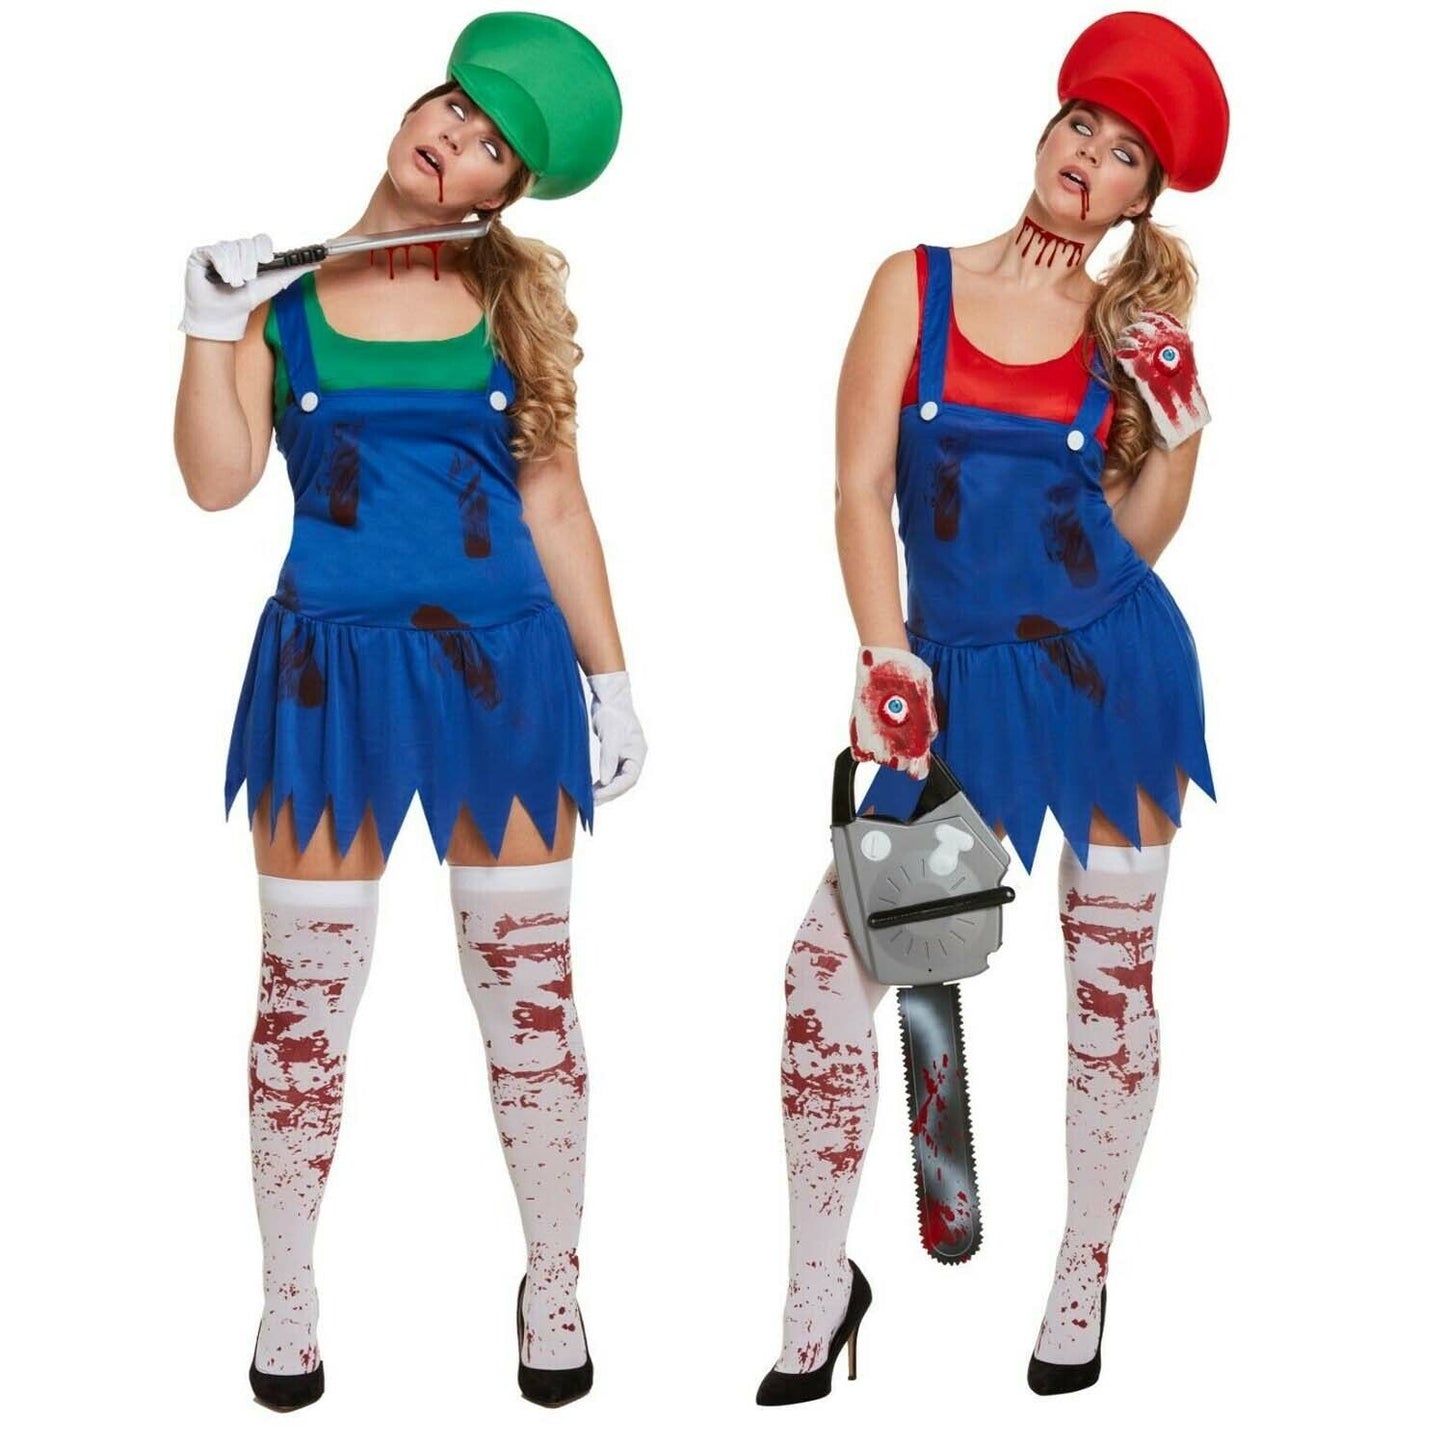 Workwoman Zombie Costume